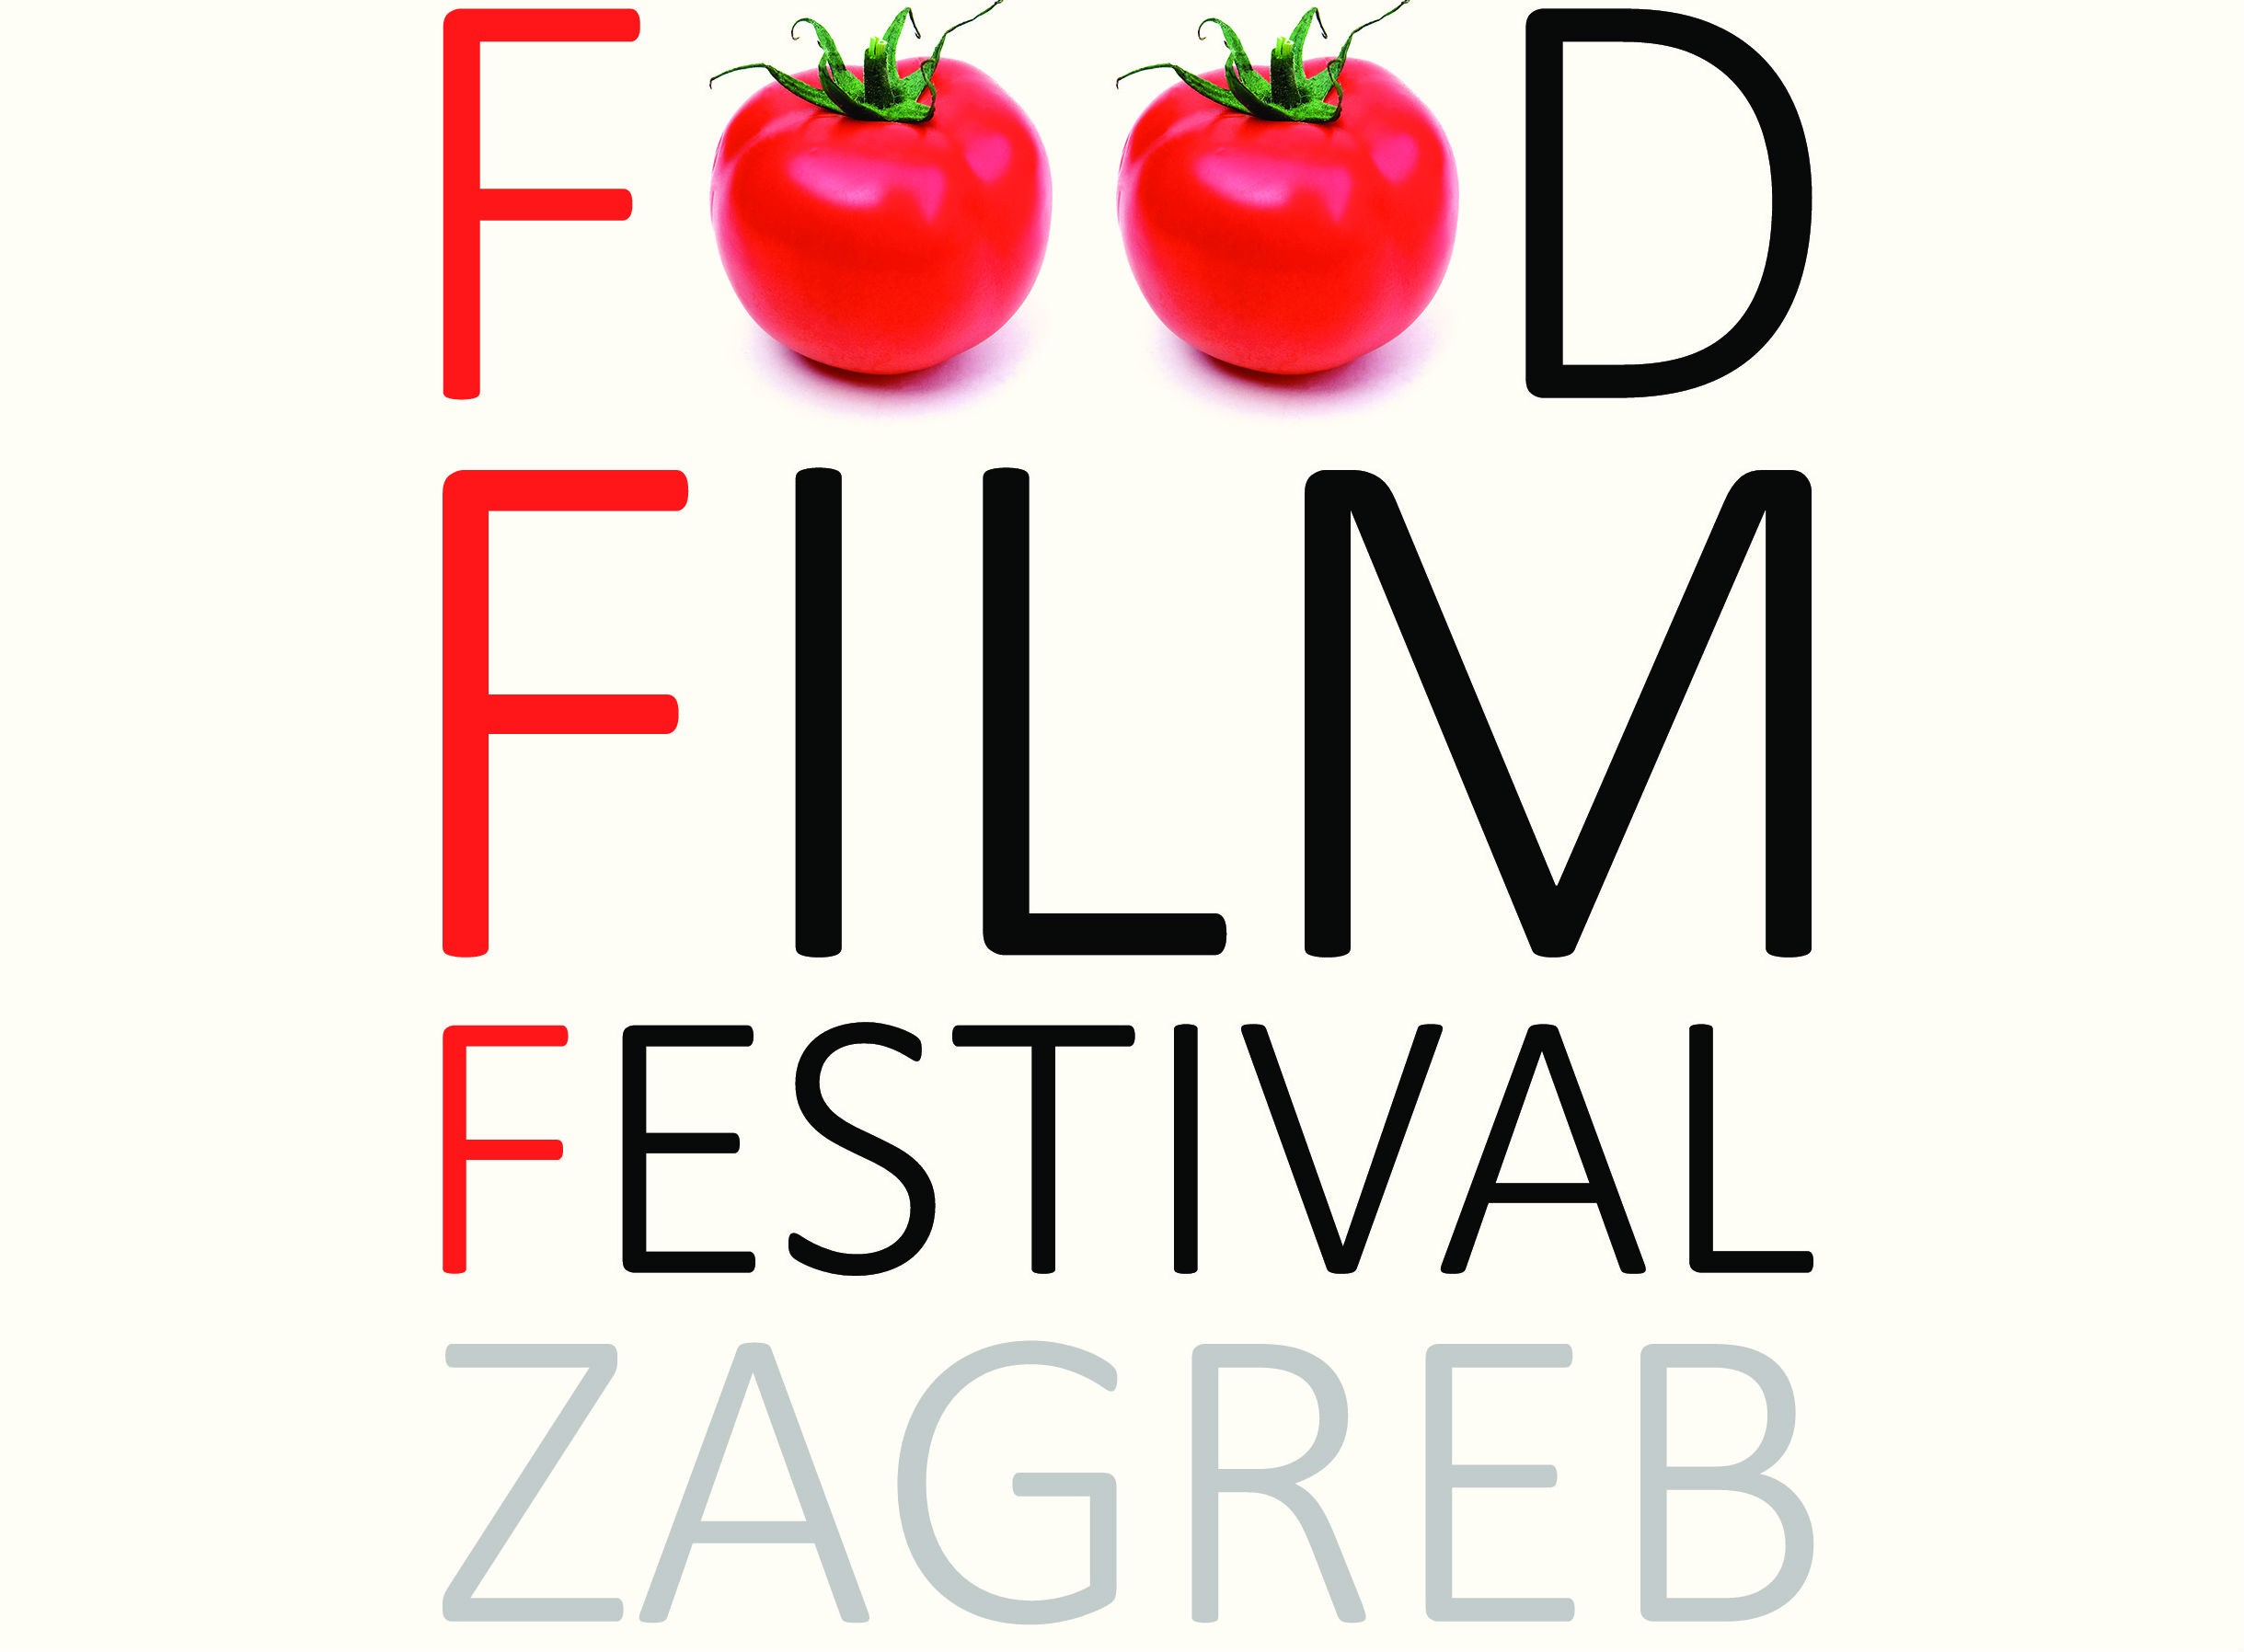 Food Film Festival